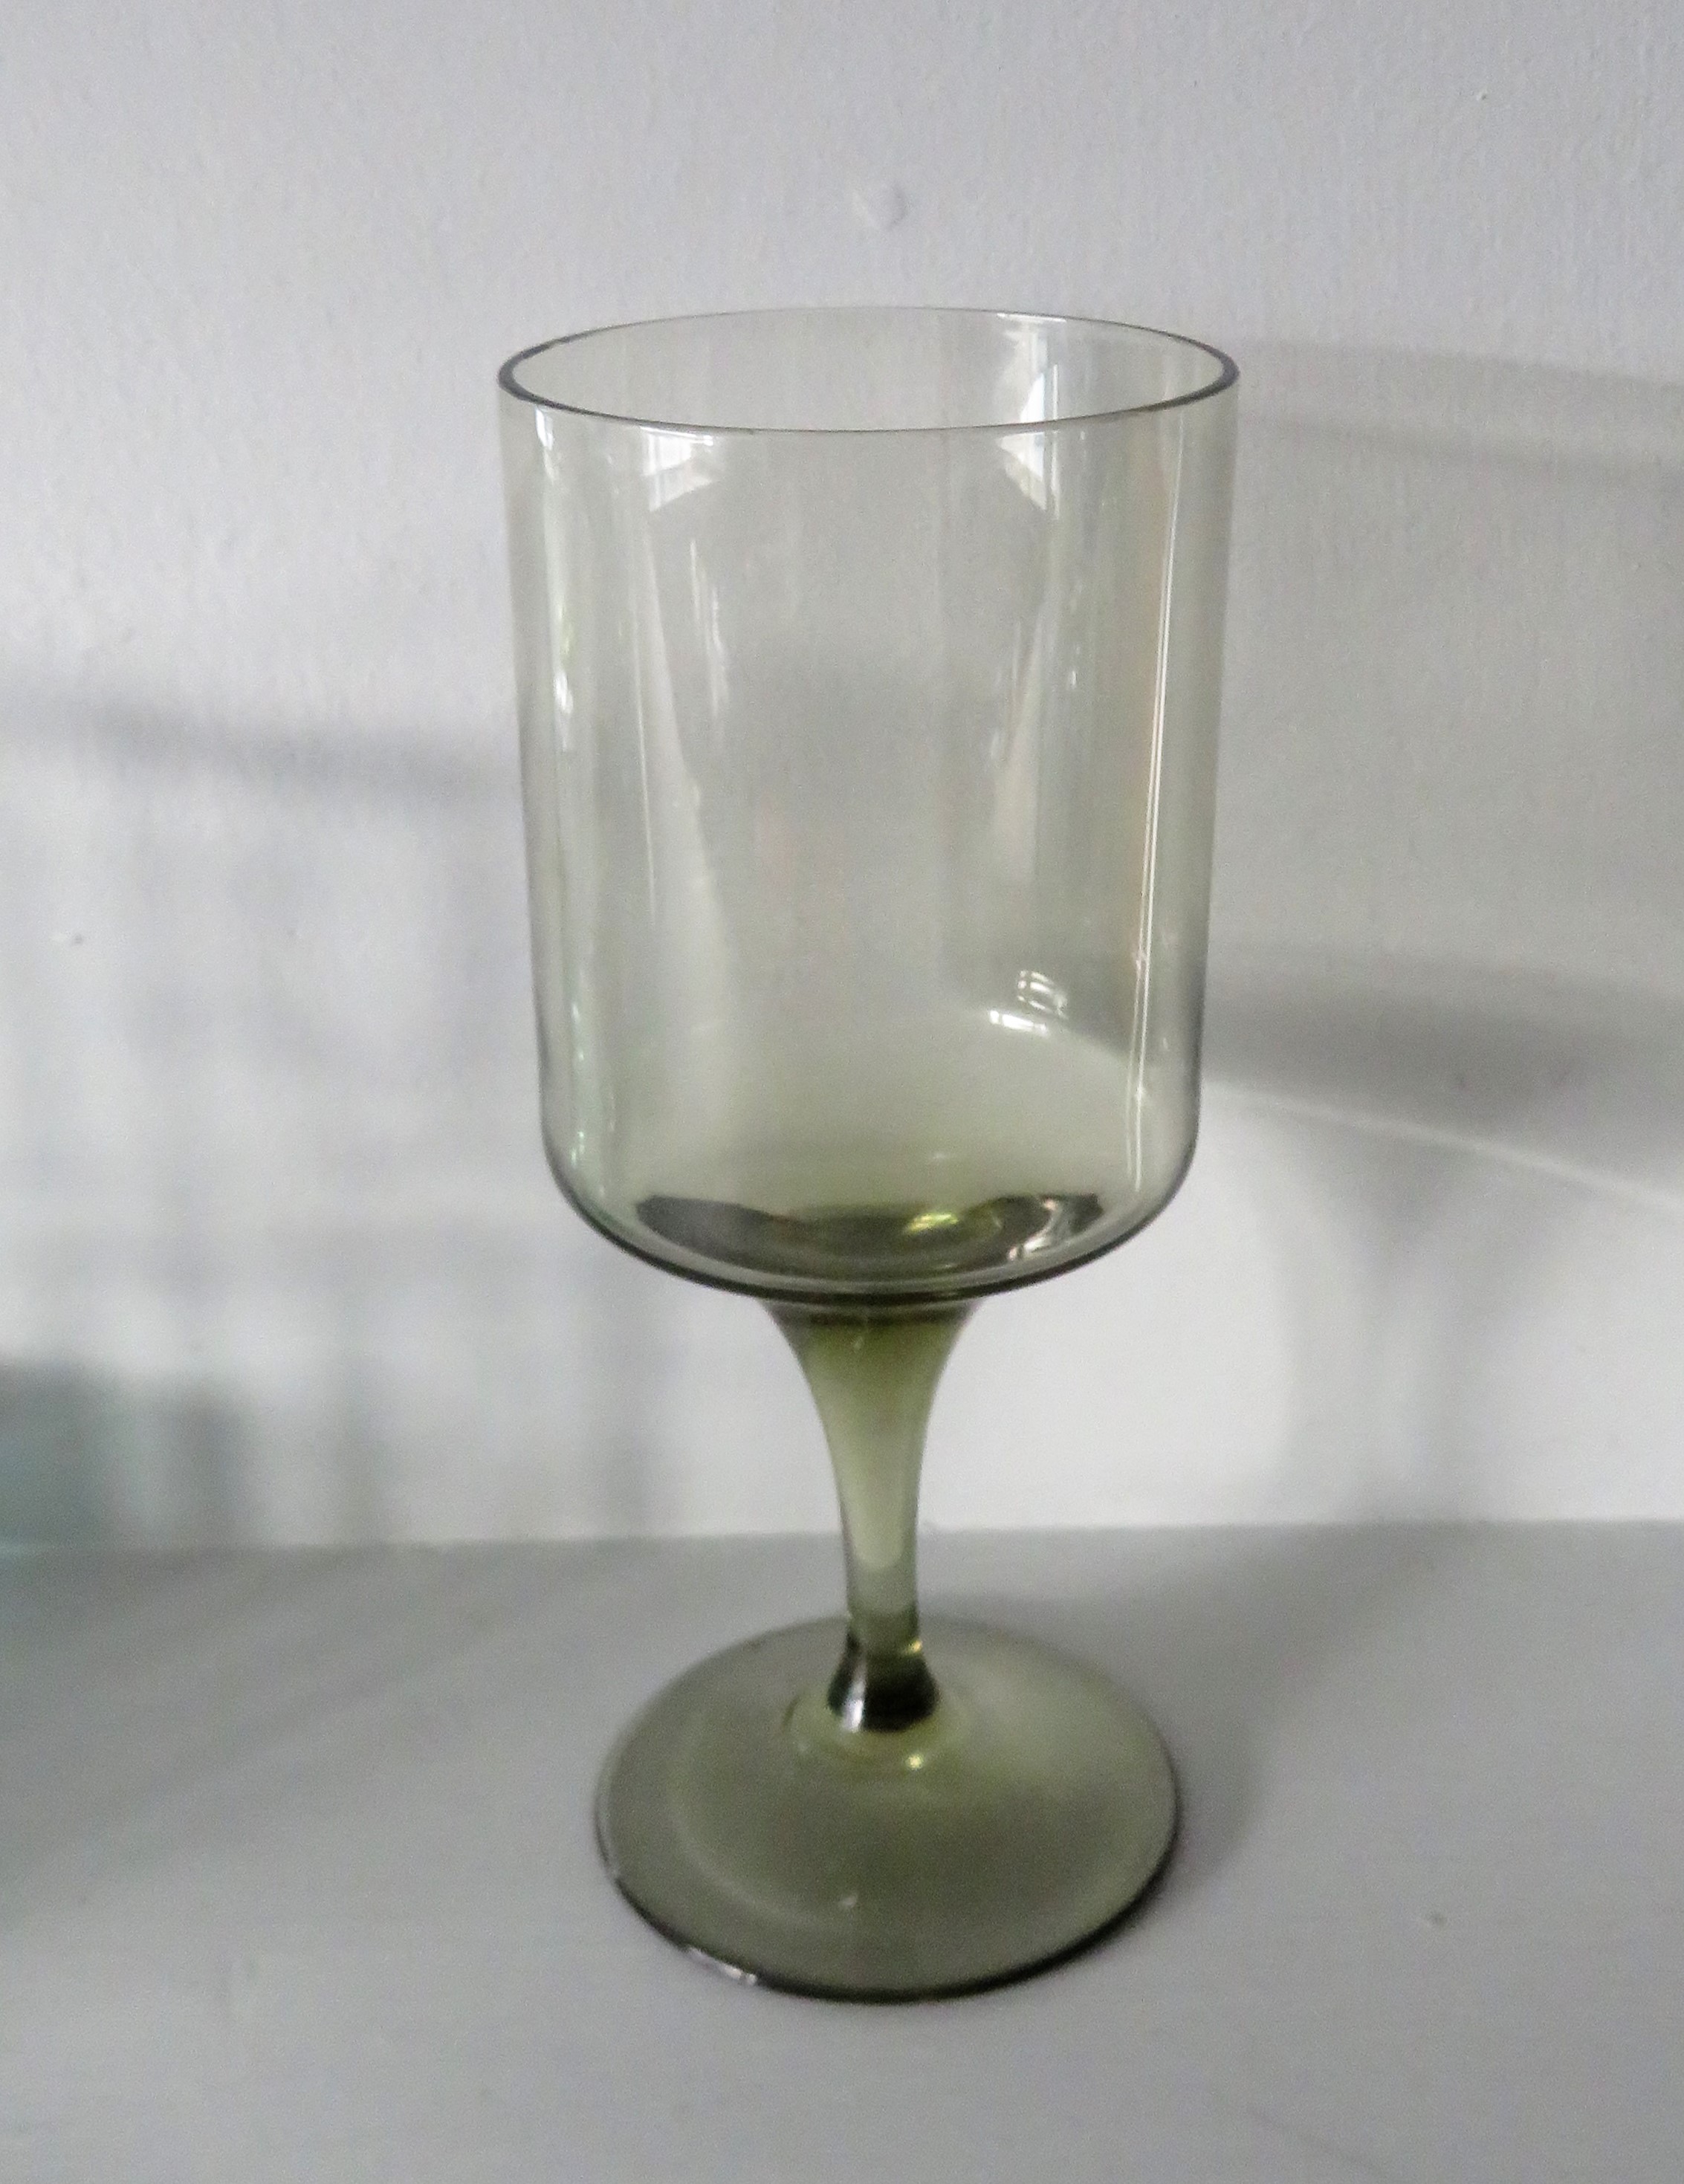 A Scandinavian style Wine Glass in smokey brown glass